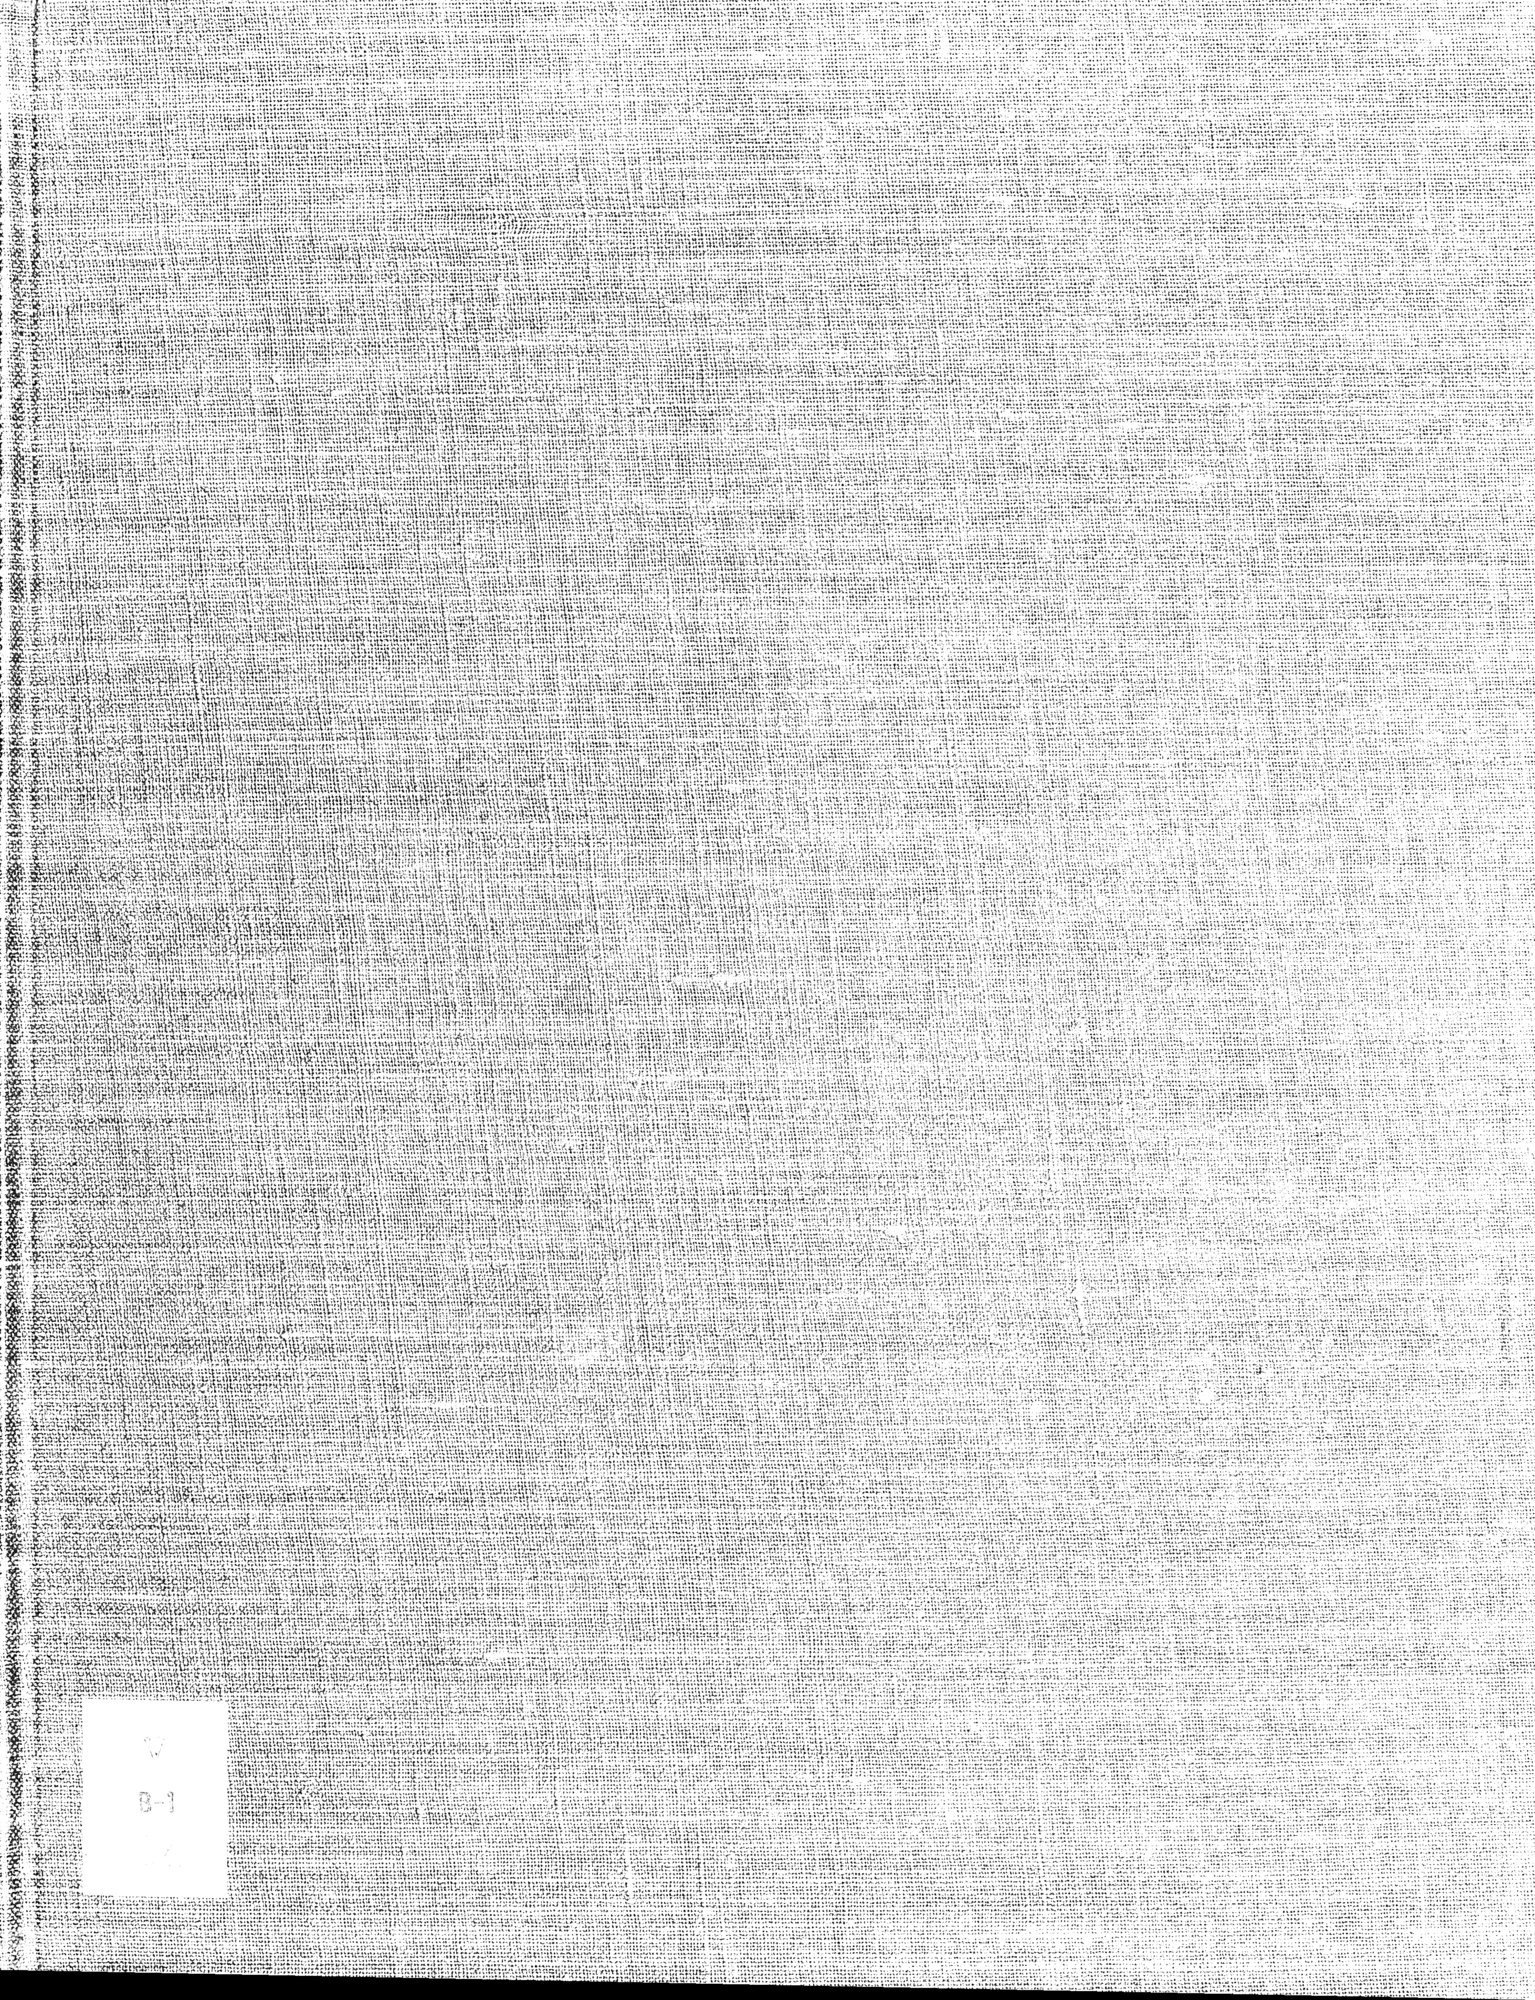 Mongoliia i Kam : vol.4 / Page 1 (Grayscale High Resolution Image)